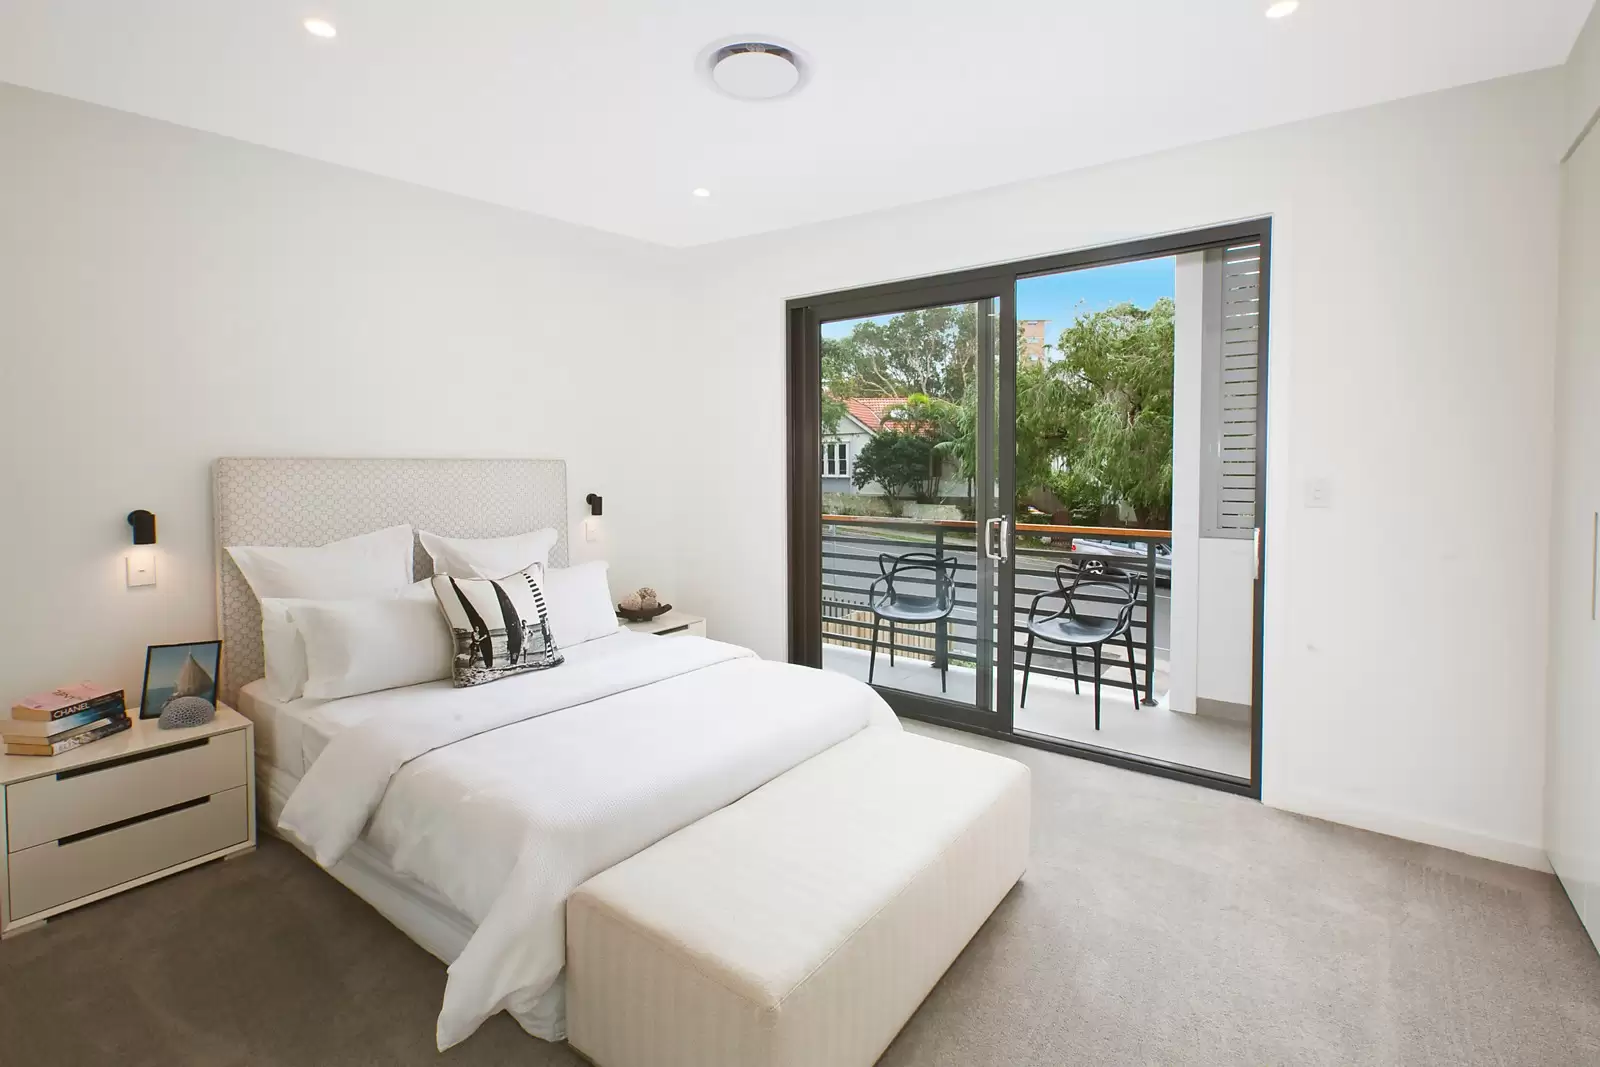 64 Lamrock Avenue, Bondi Beach Sold by Sydney Sotheby's International Realty - image 6